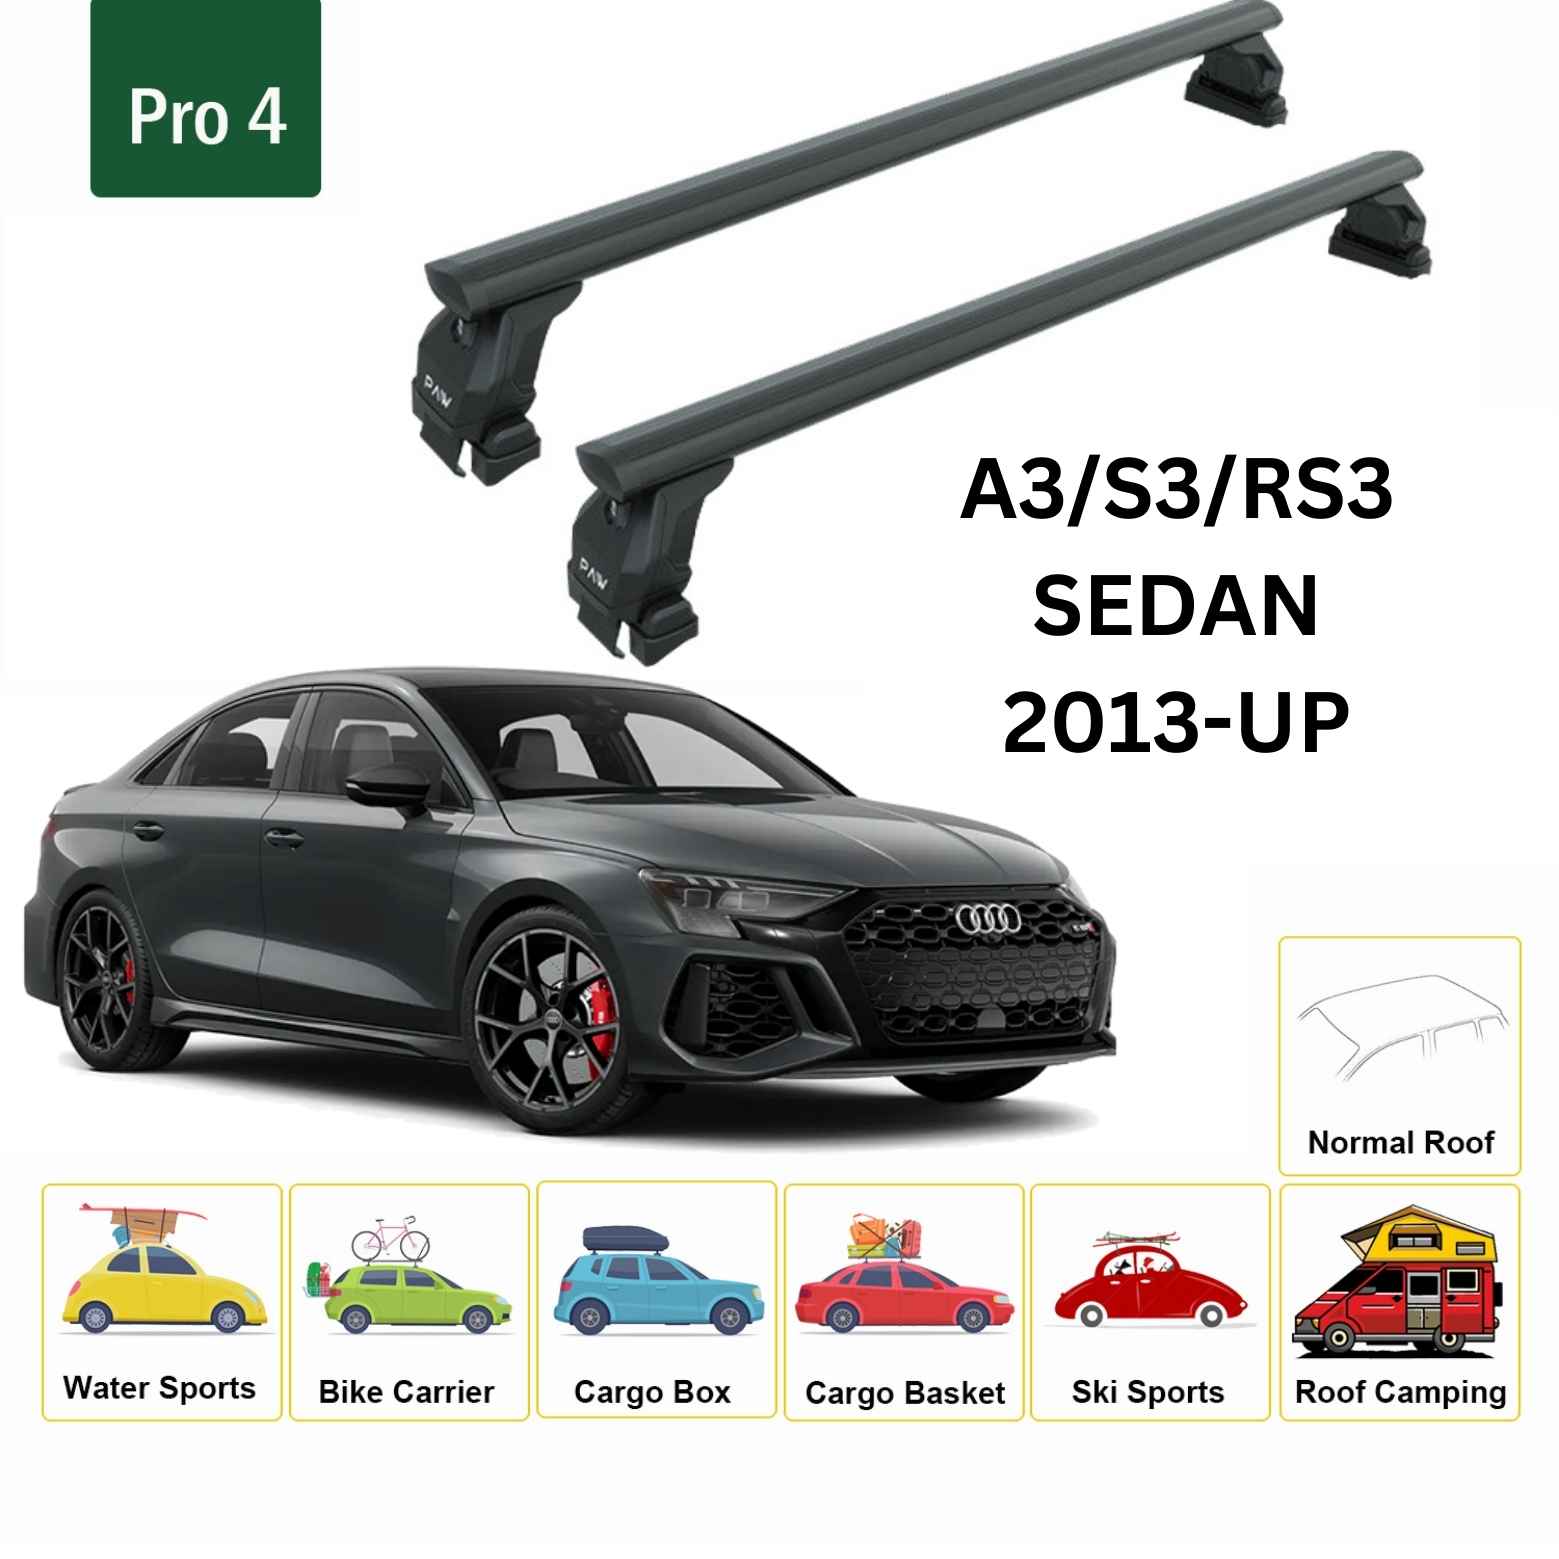 For Audi A3 Sedan Roof Rack Cross Bars Normal Roof Alu Black 2013-Up